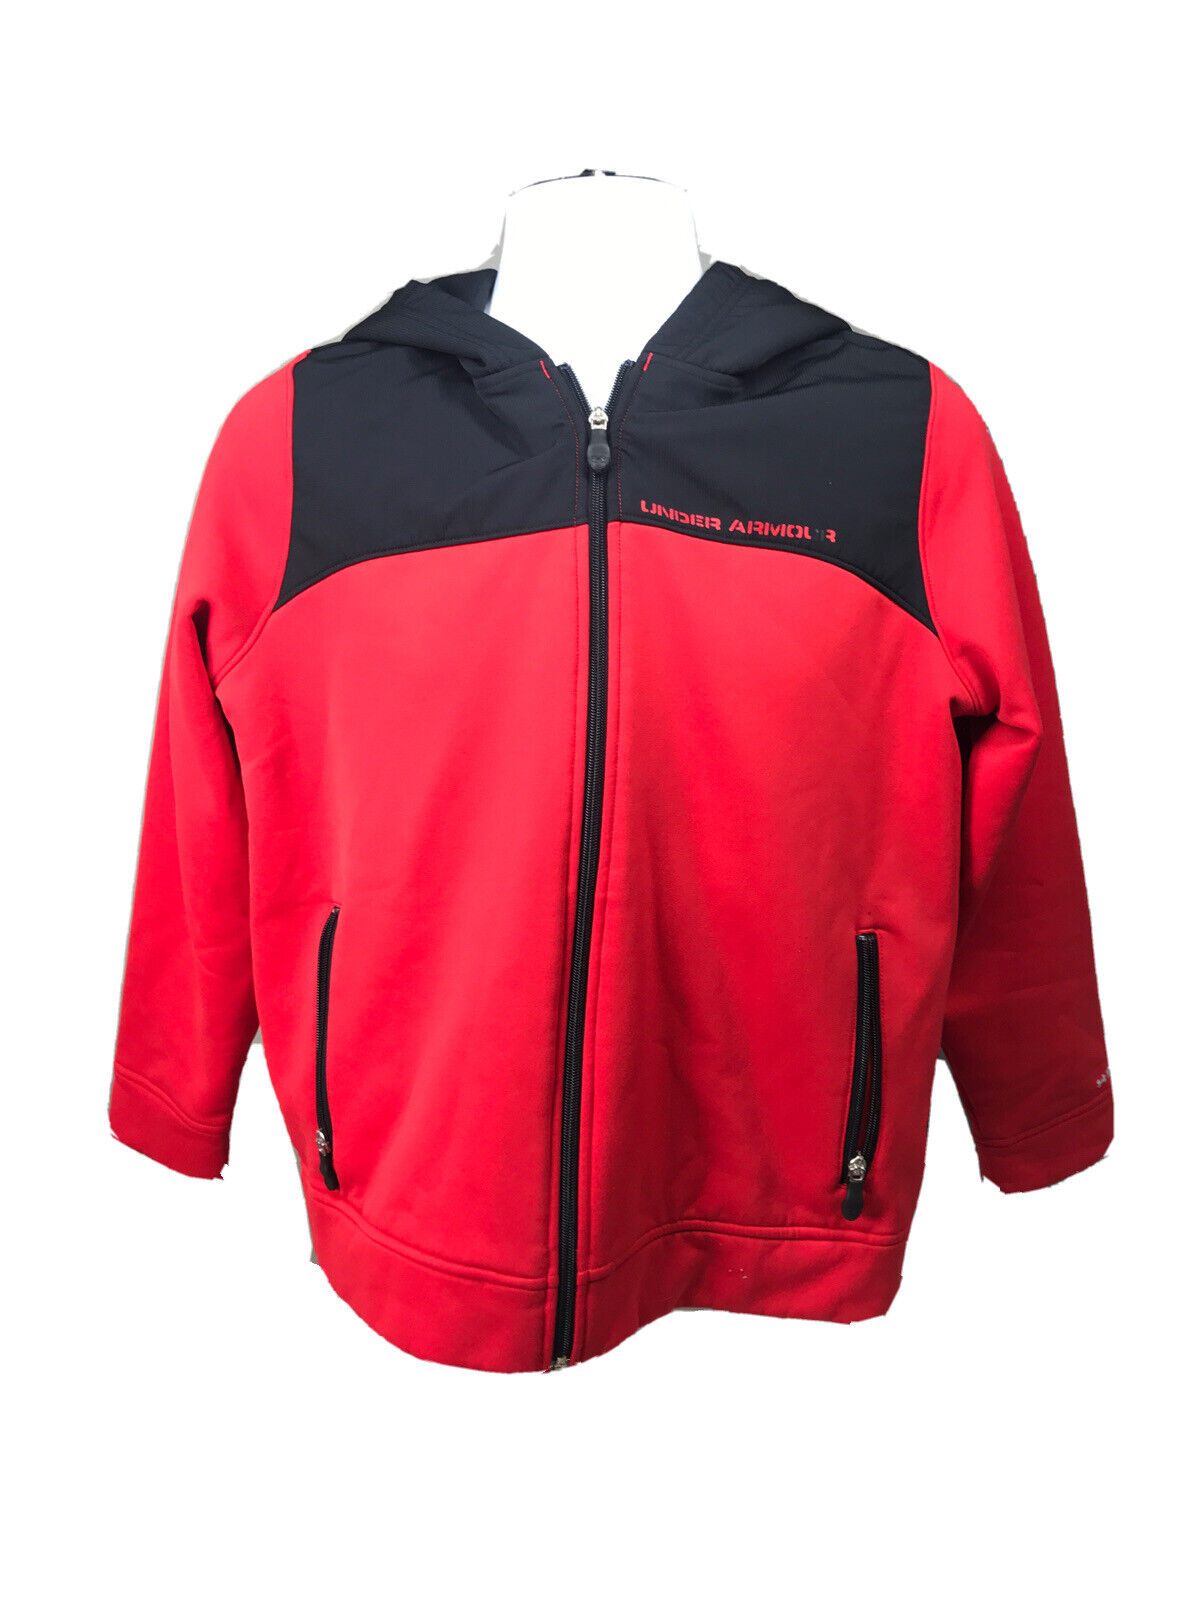 Under Armour Boys Red Full Zip Infrared Hooded Lightweight Jacket Sz XL